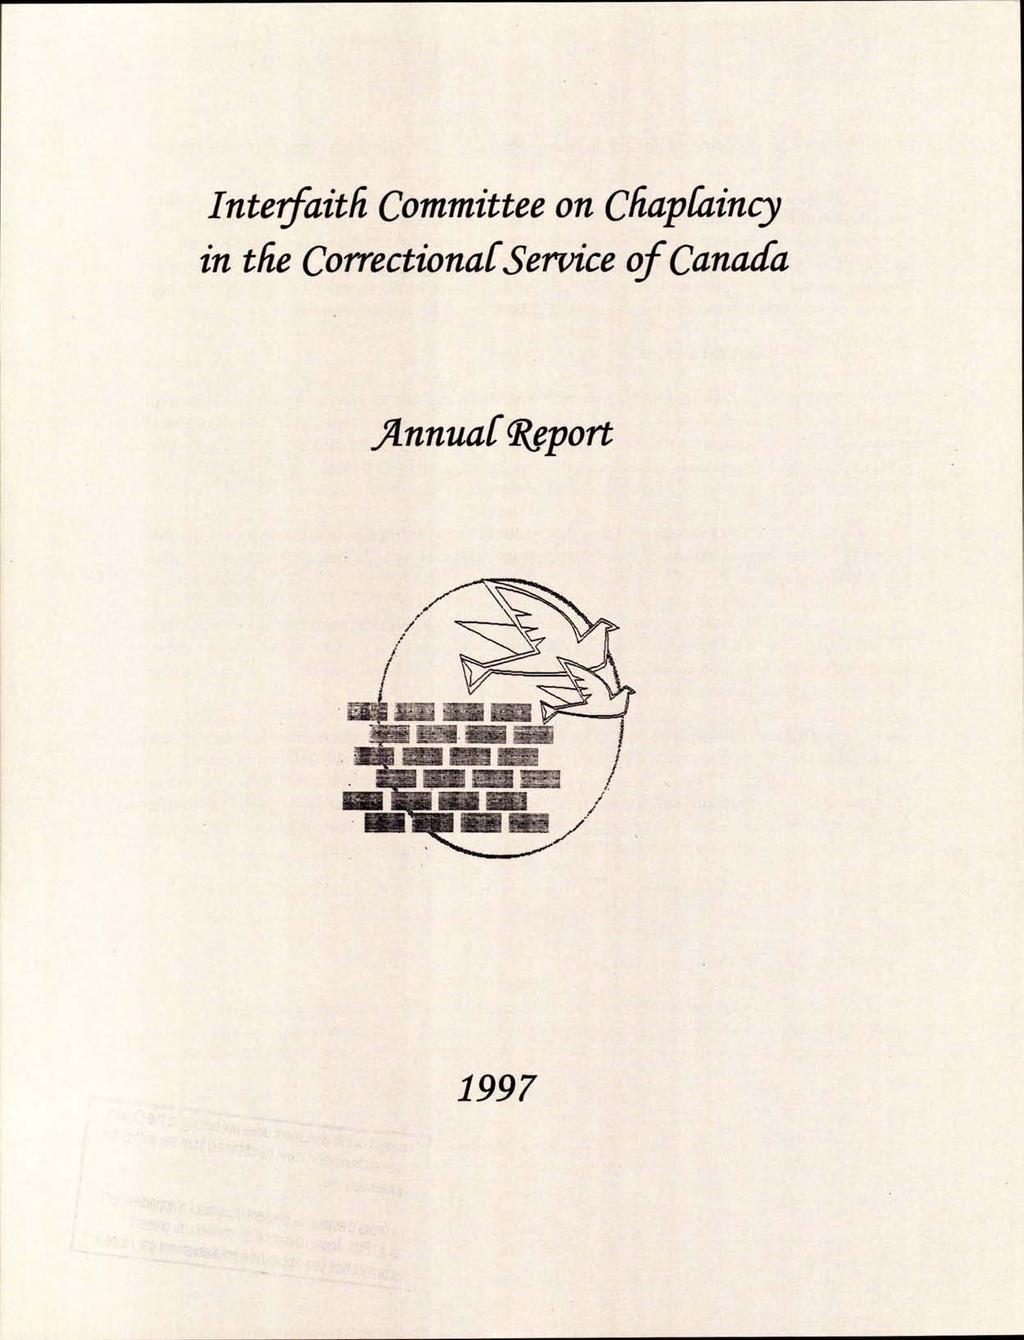 Inteaith Committee on Chapfaincy in the